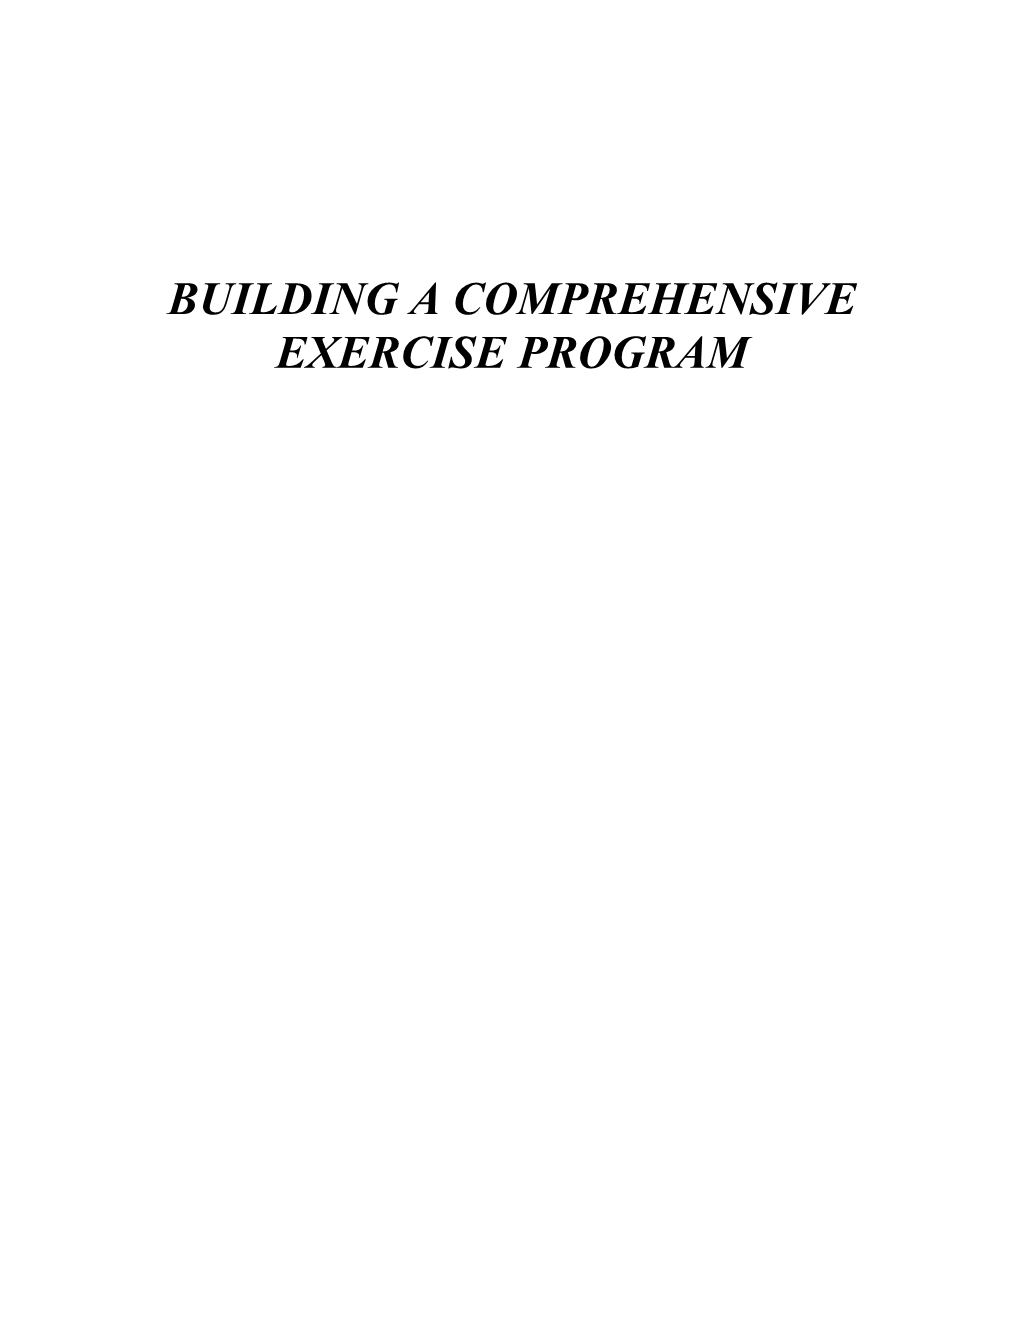 Building a Comprehensive Exercise Program